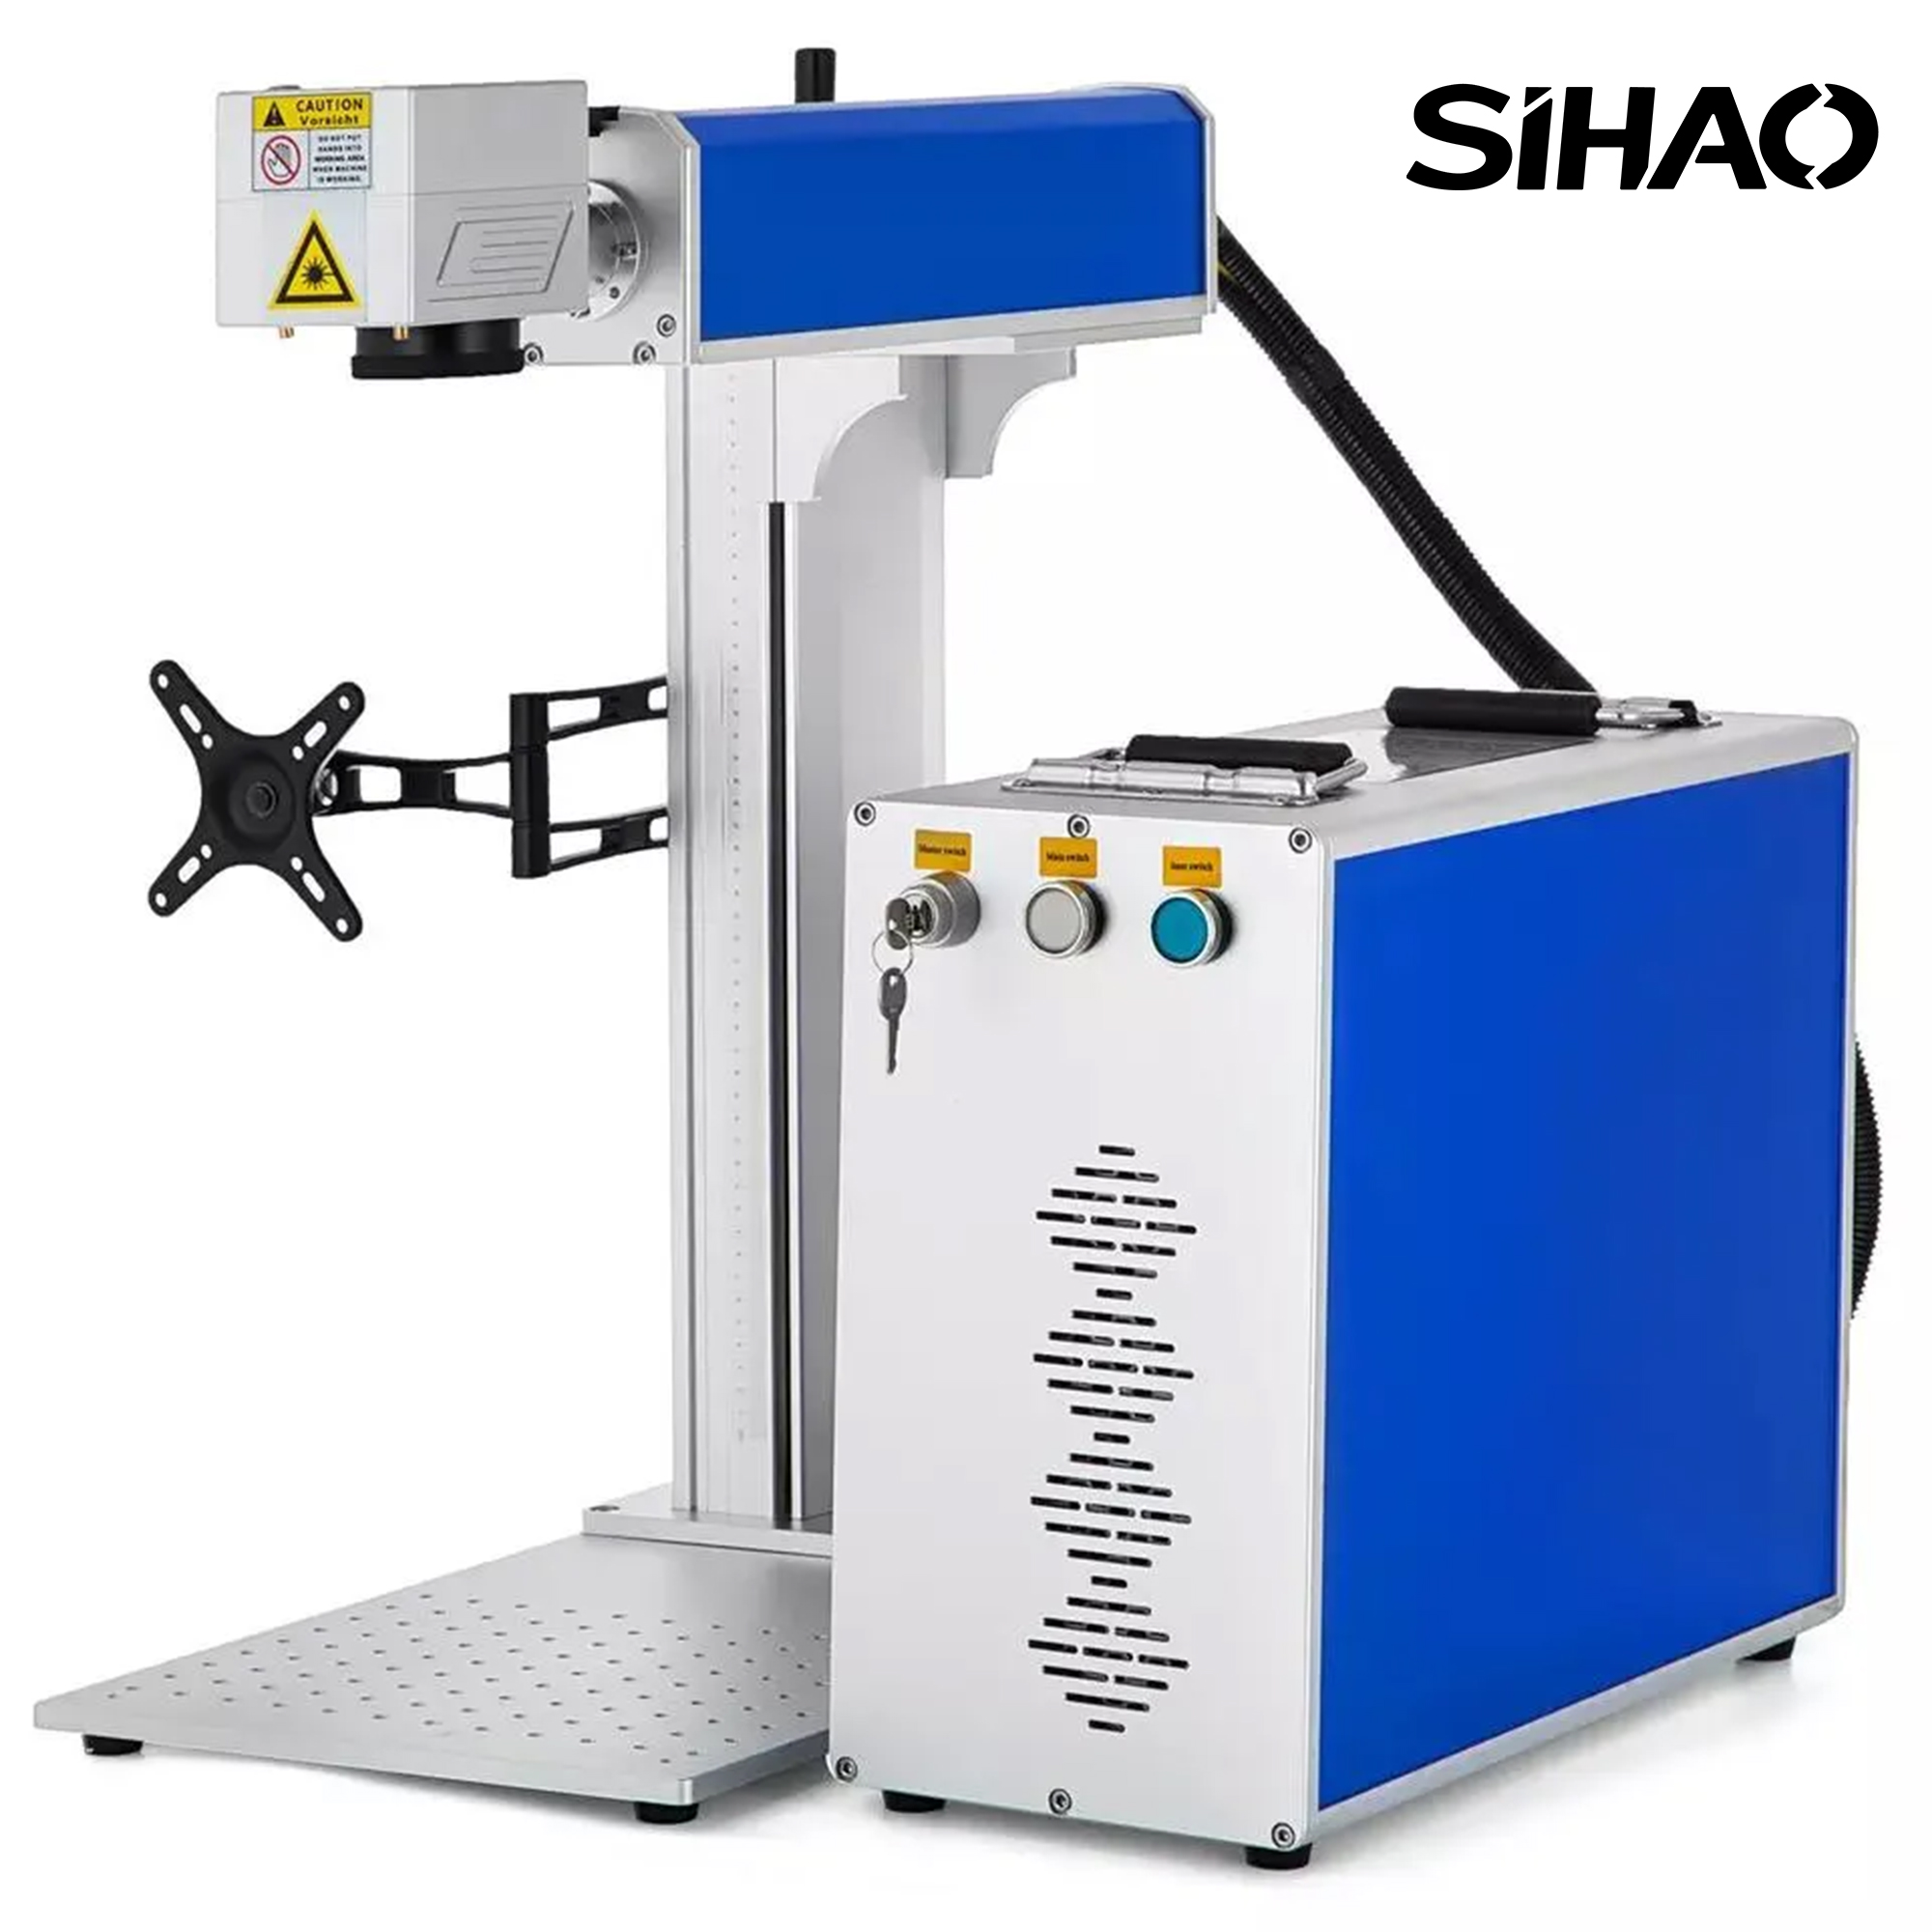 SIHAO 20W Portable Fiber Laser Marking Machine